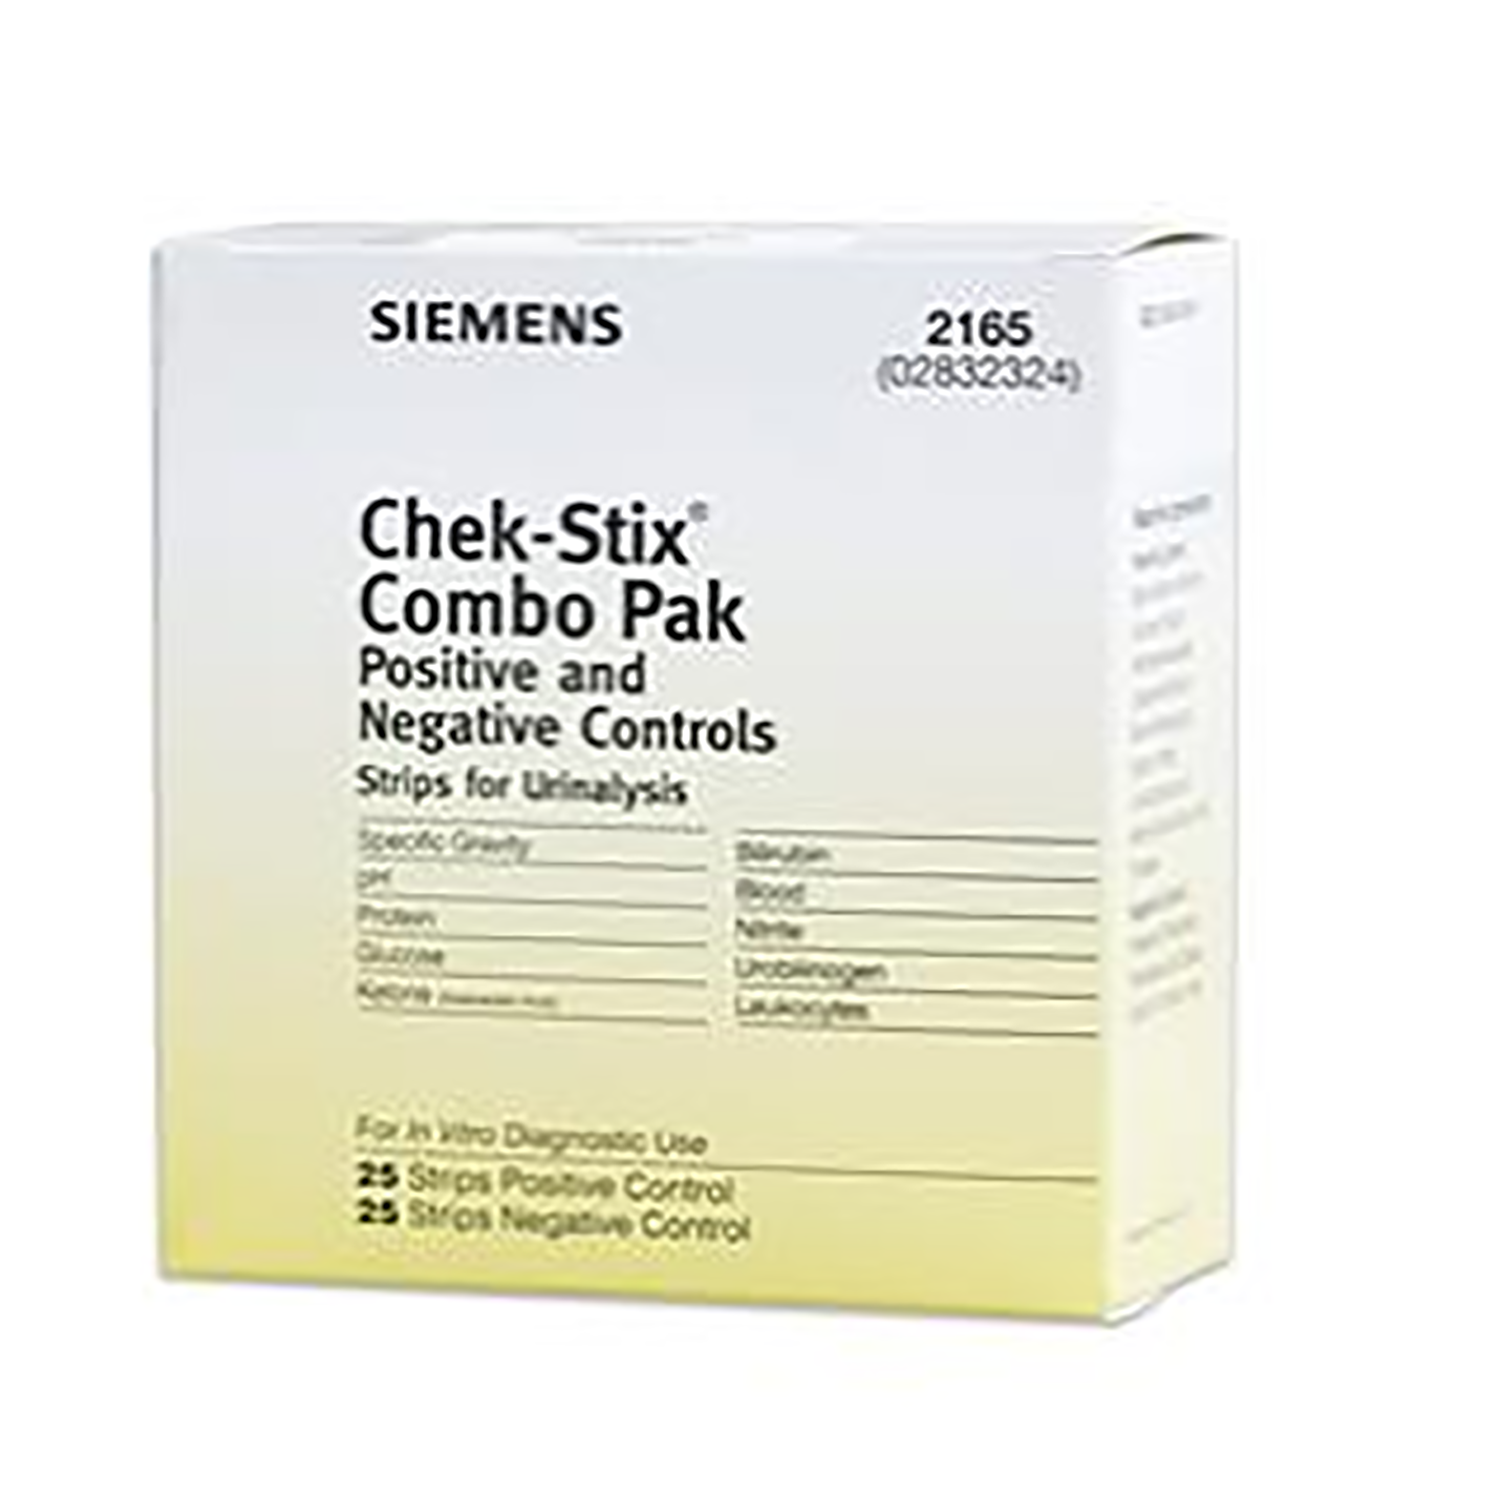 Siemens Clinitek Chek-Stix Control Sticks | Pack of 25 (+ / -) (1)